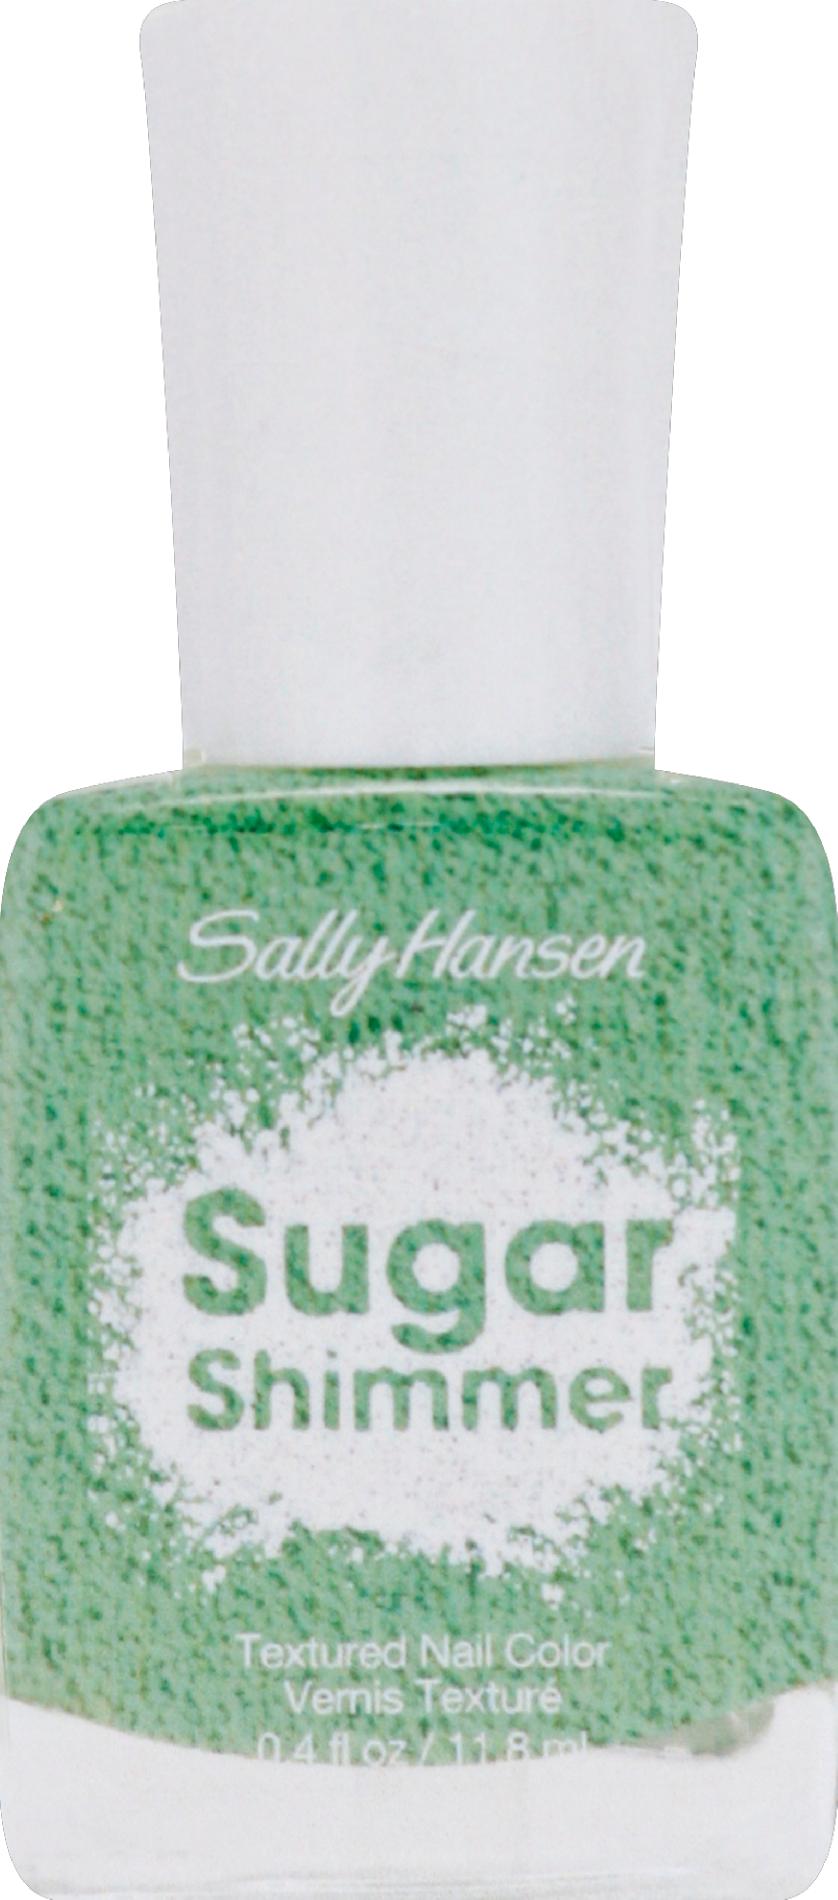 Sally Hansen Salon Effects Sugar Shimmer Textured Nail Color ~ Mint Tint 05, 0.4 fl oz (11.8 mL)